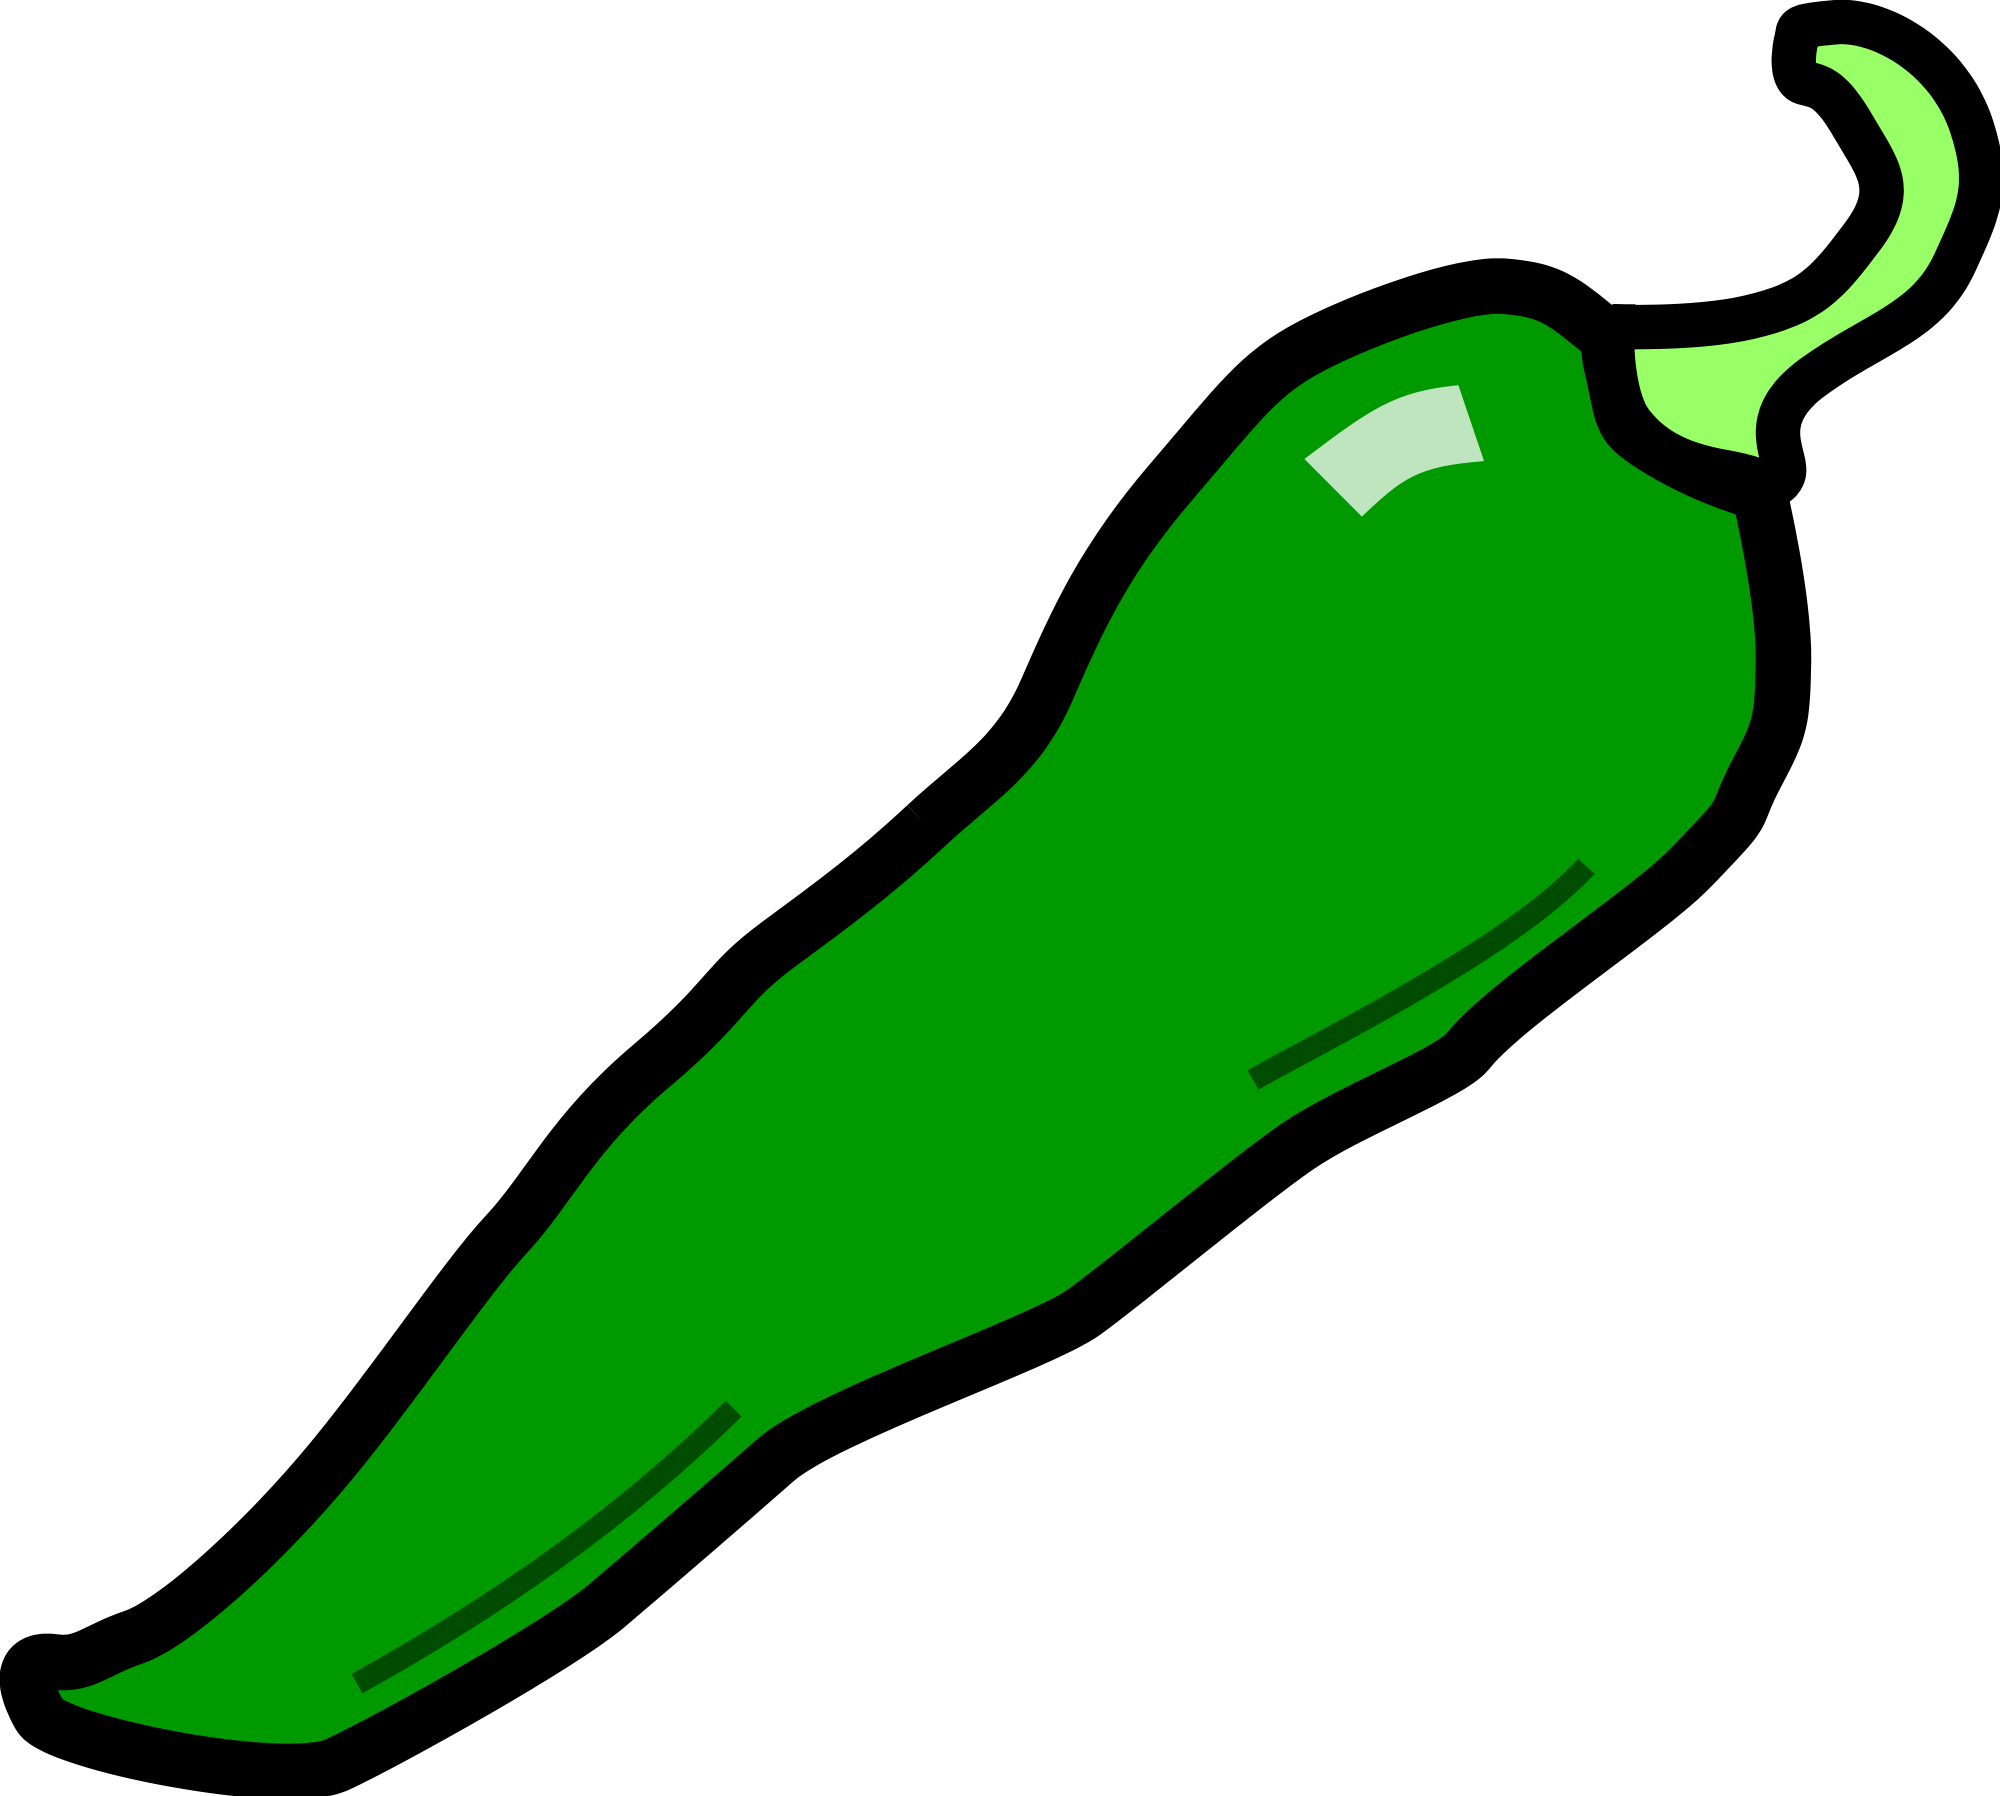 Chili Green Hd Image Clipart